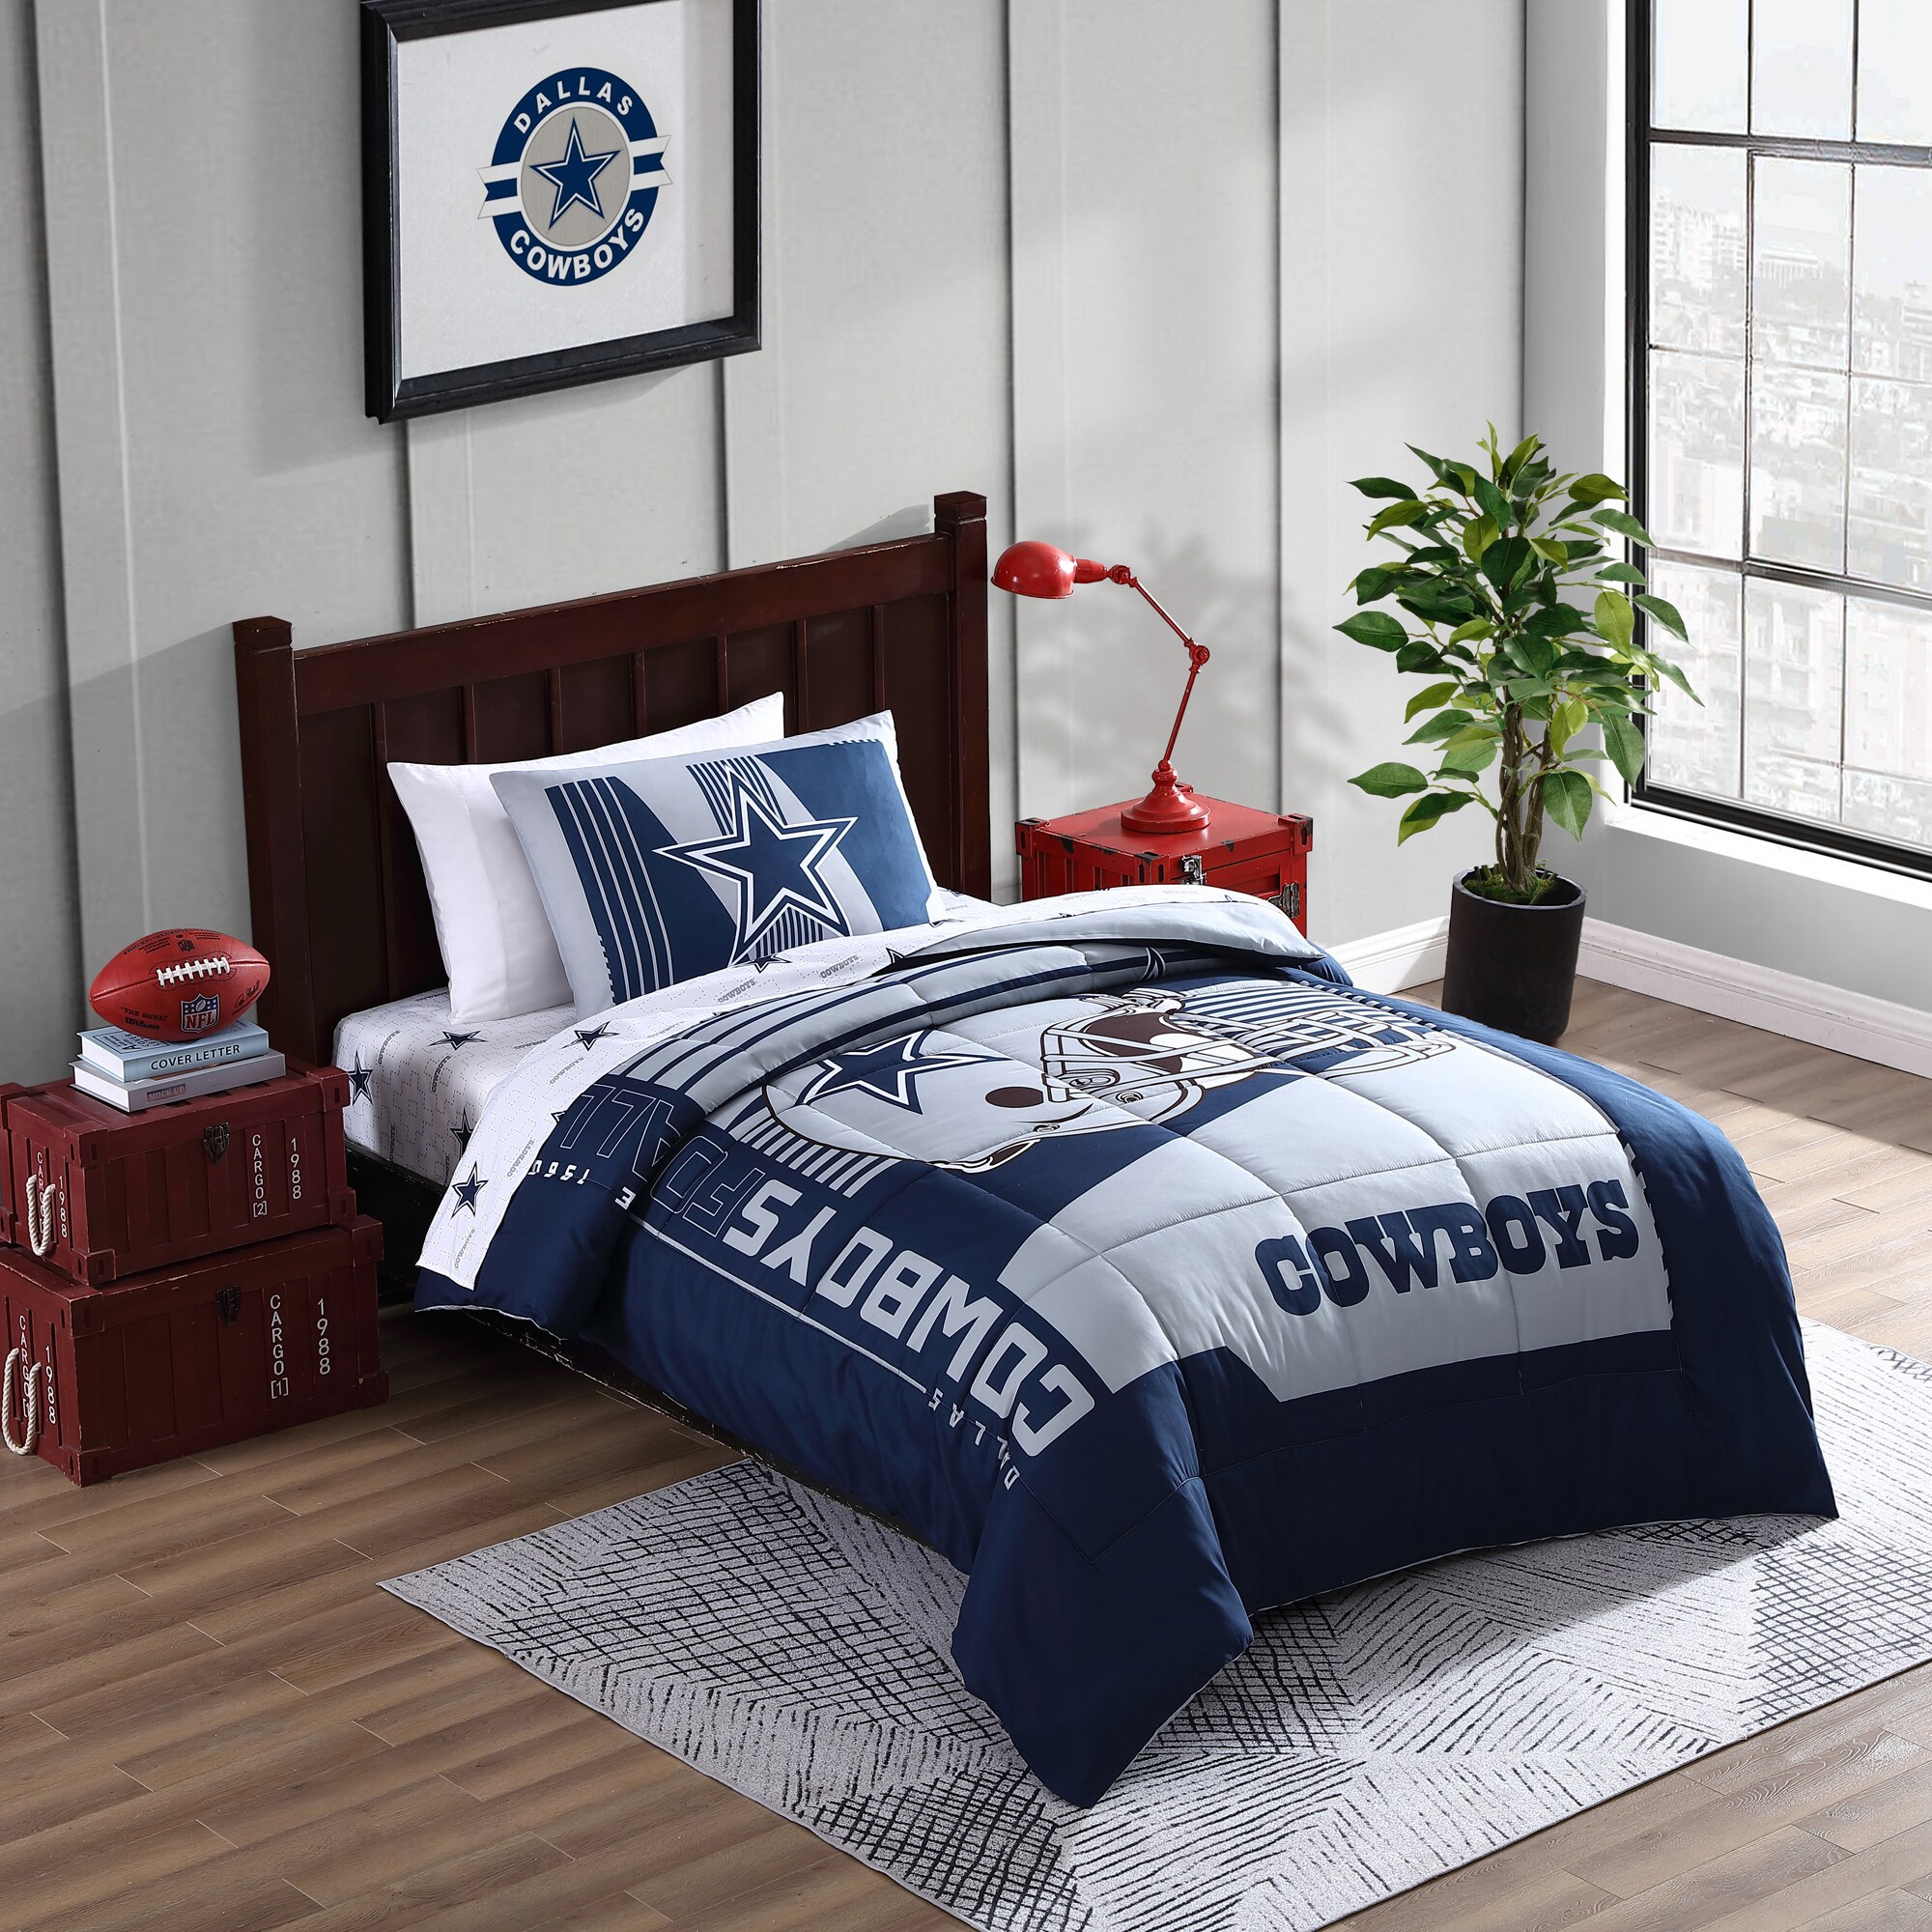 Details about   3 Piece Dallas Cowboys Western Star Design Quilt BedSpread Comforter Navy Blue 